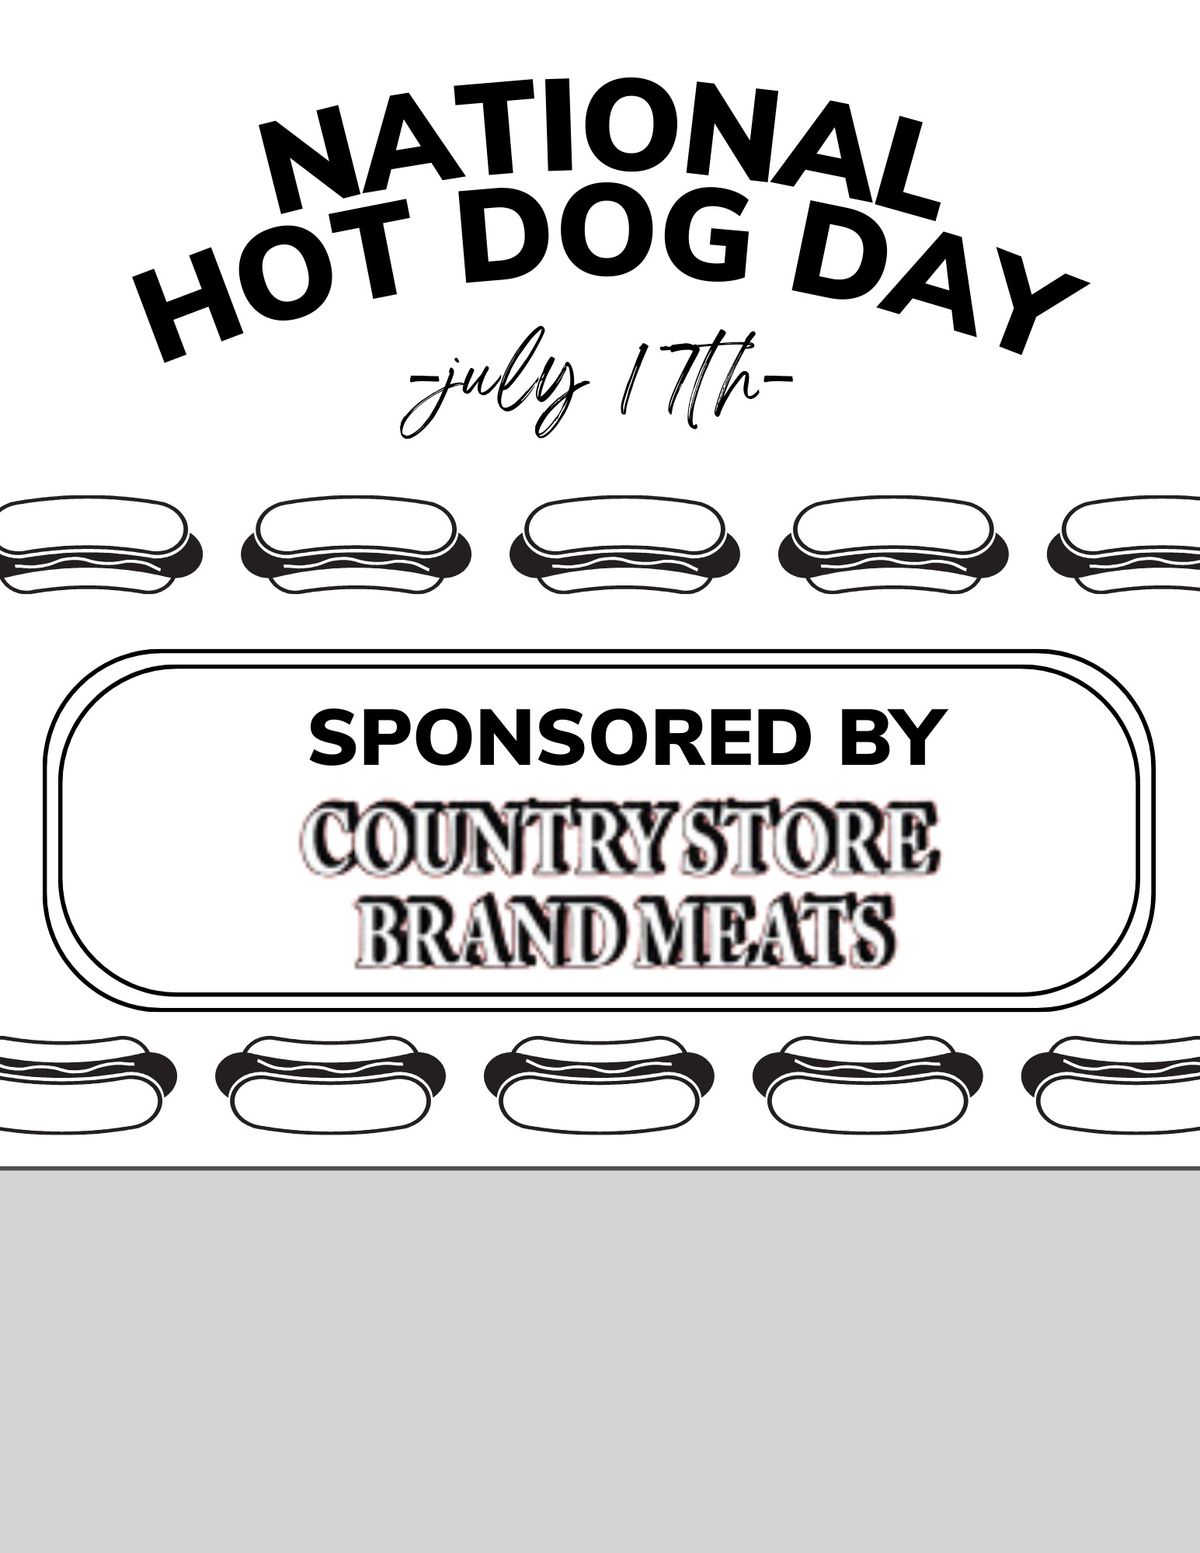 National Hot Dog Day 